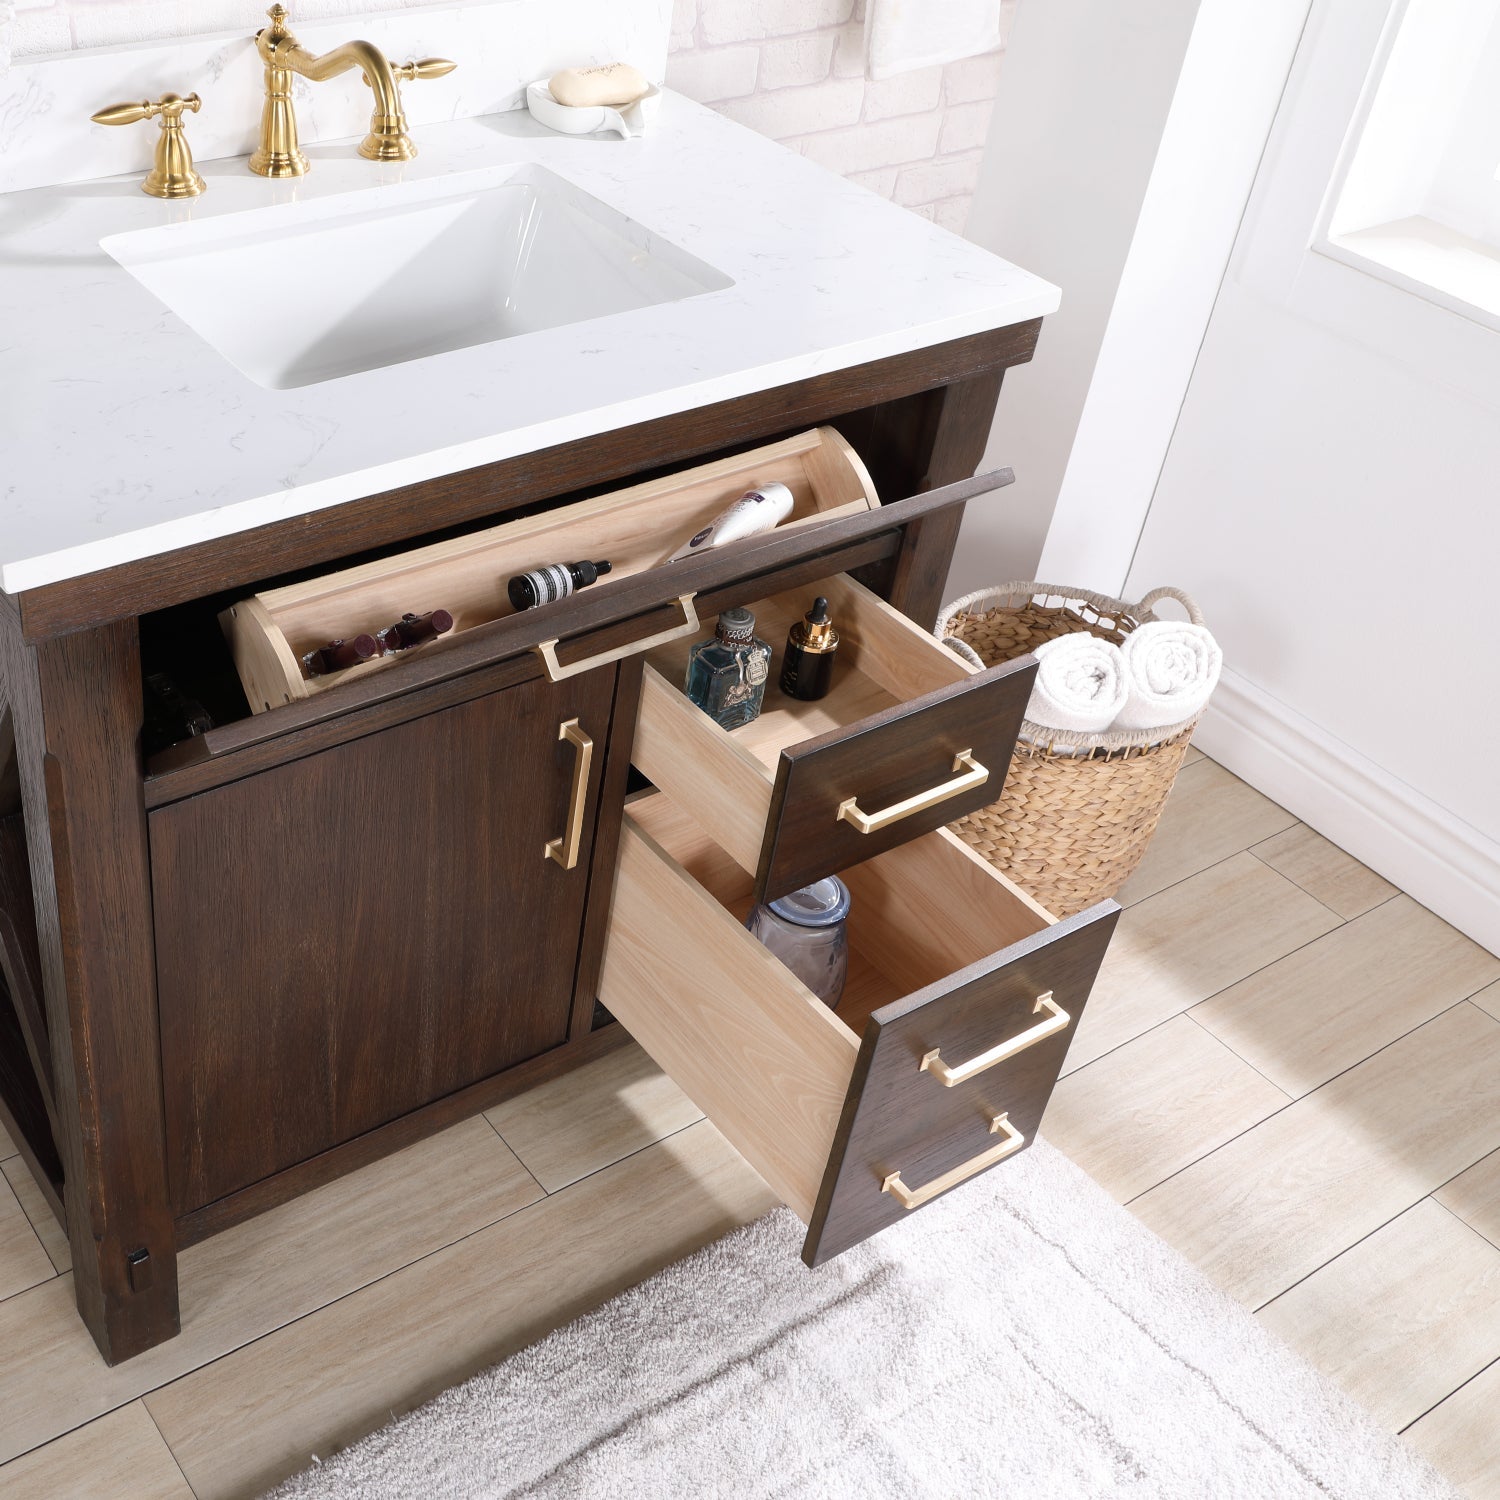 Vinnova Design Viella 36" Single Sink Bath Vanity in Deep Walnut with White Composite Countertop - New Star Living